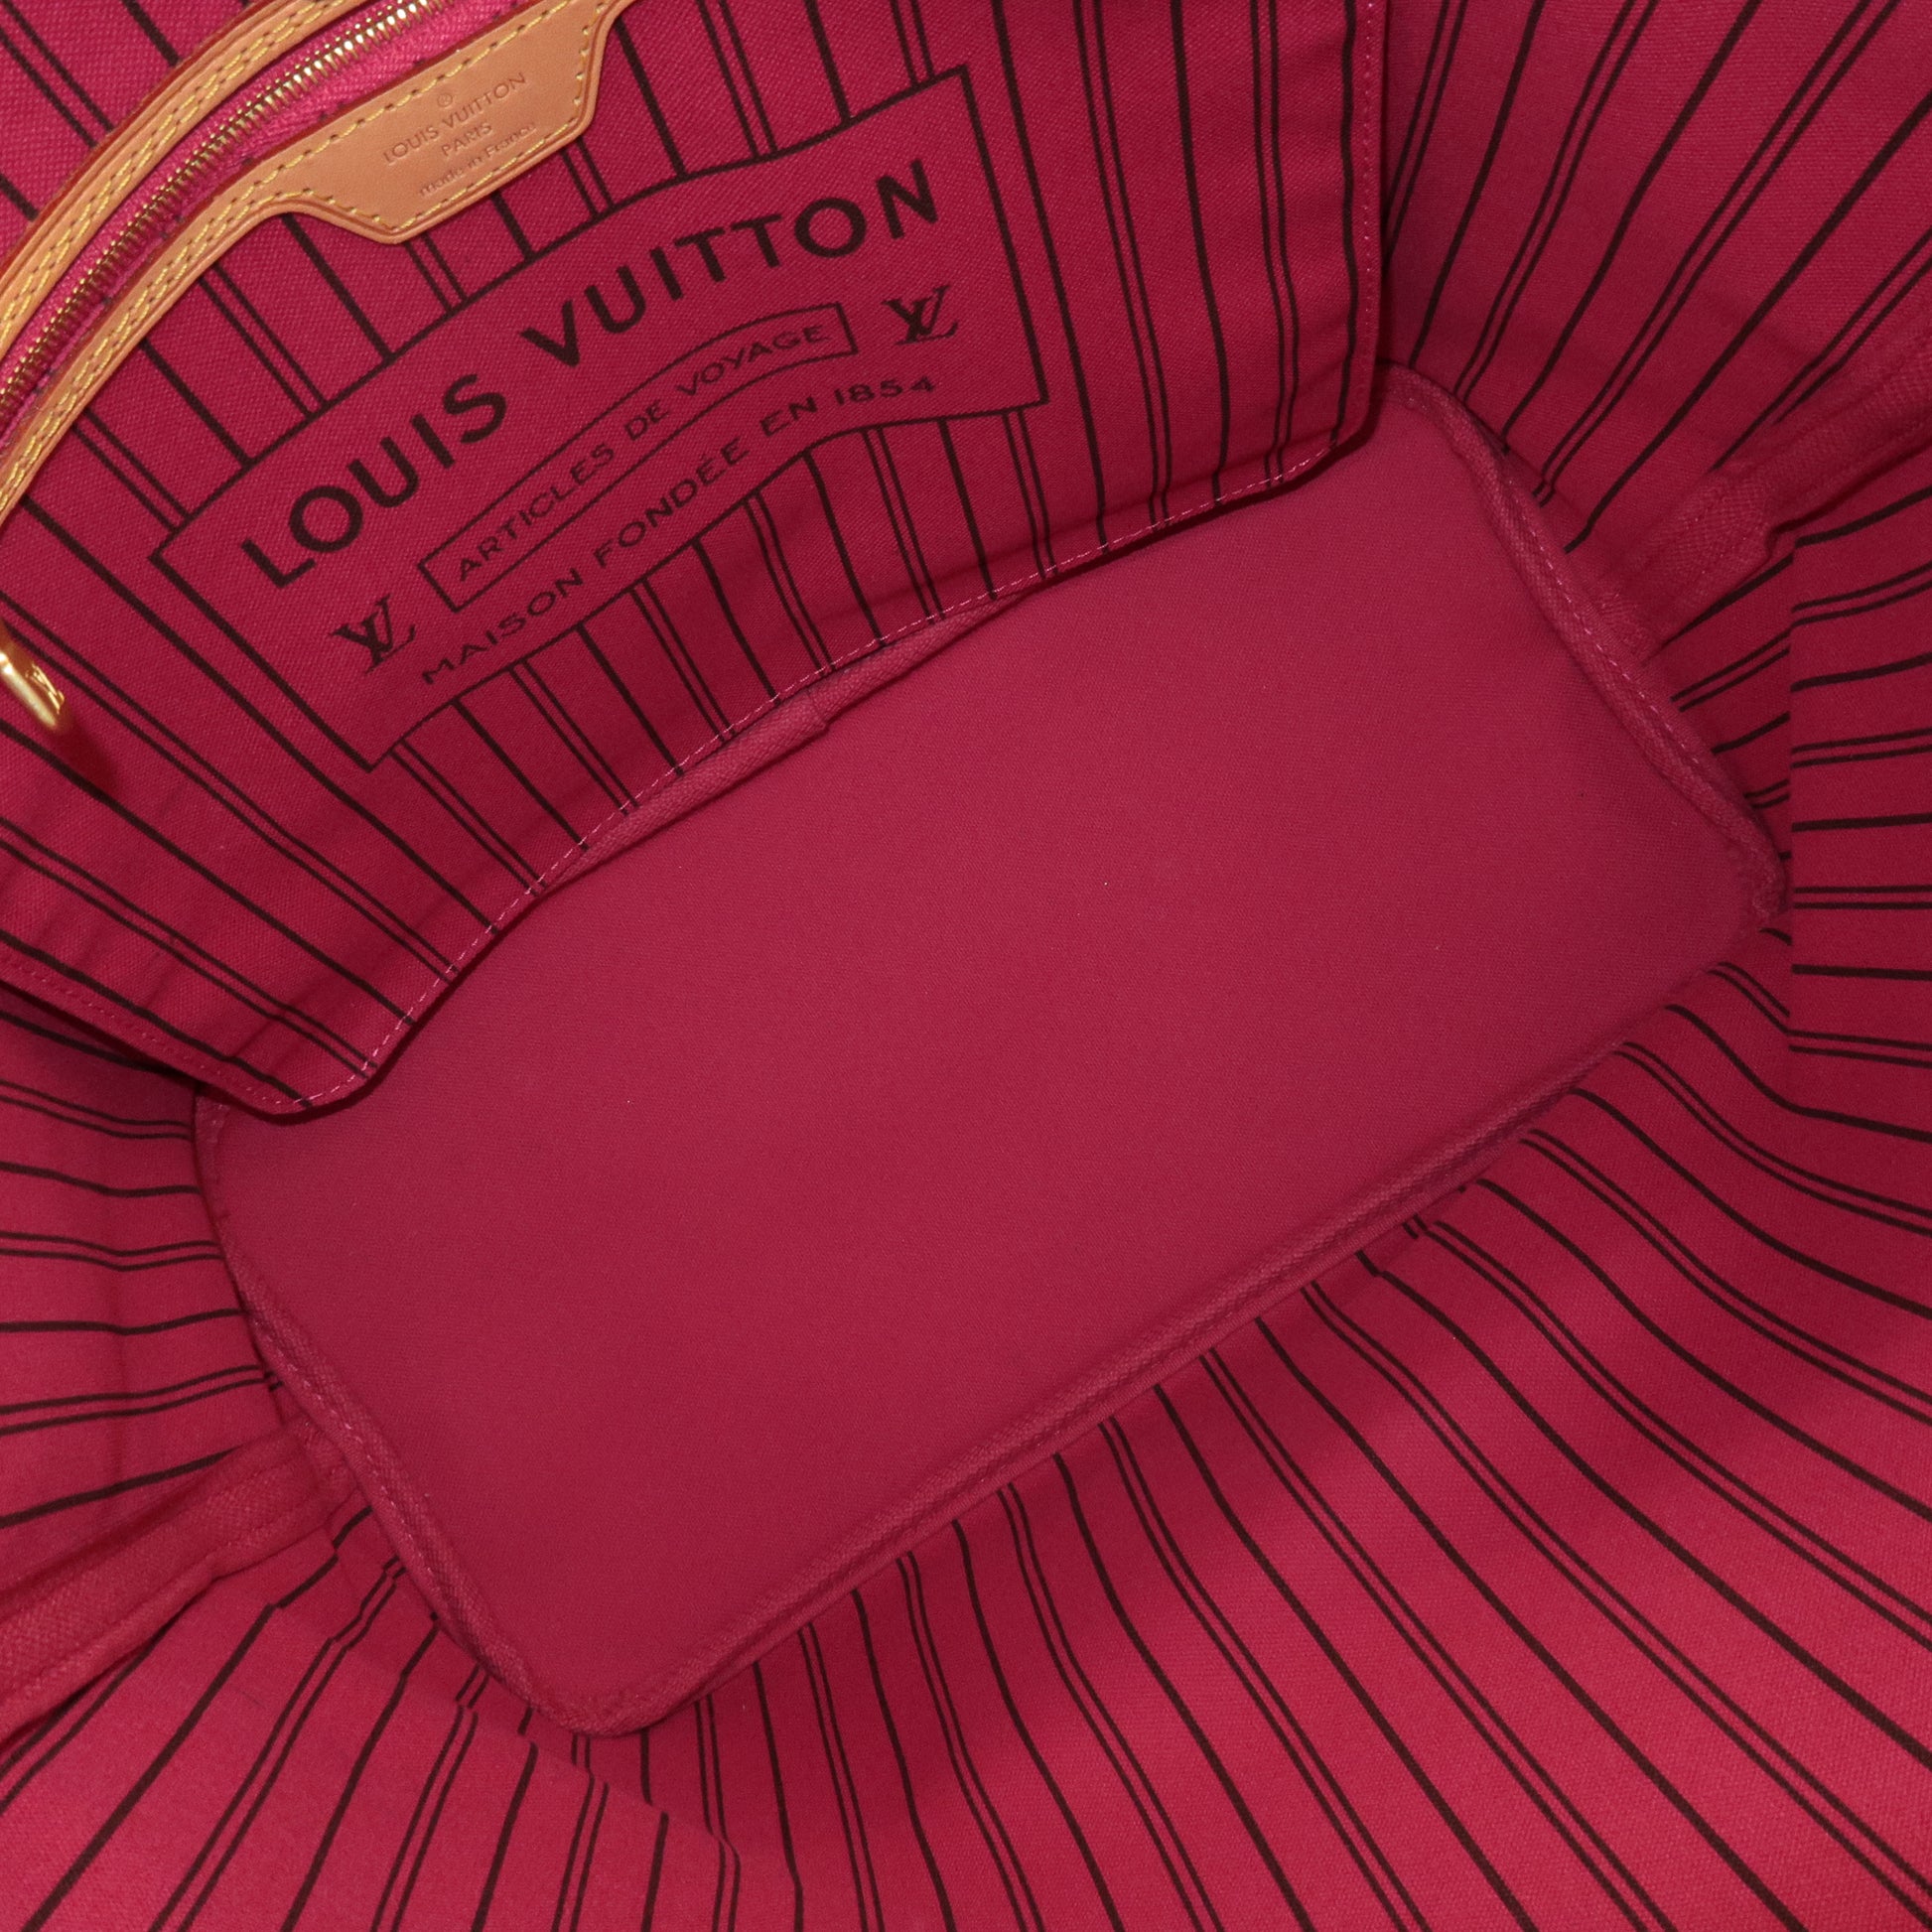 Louis Vuitton F/W 20 Since 1854 Neverfull MM Auction